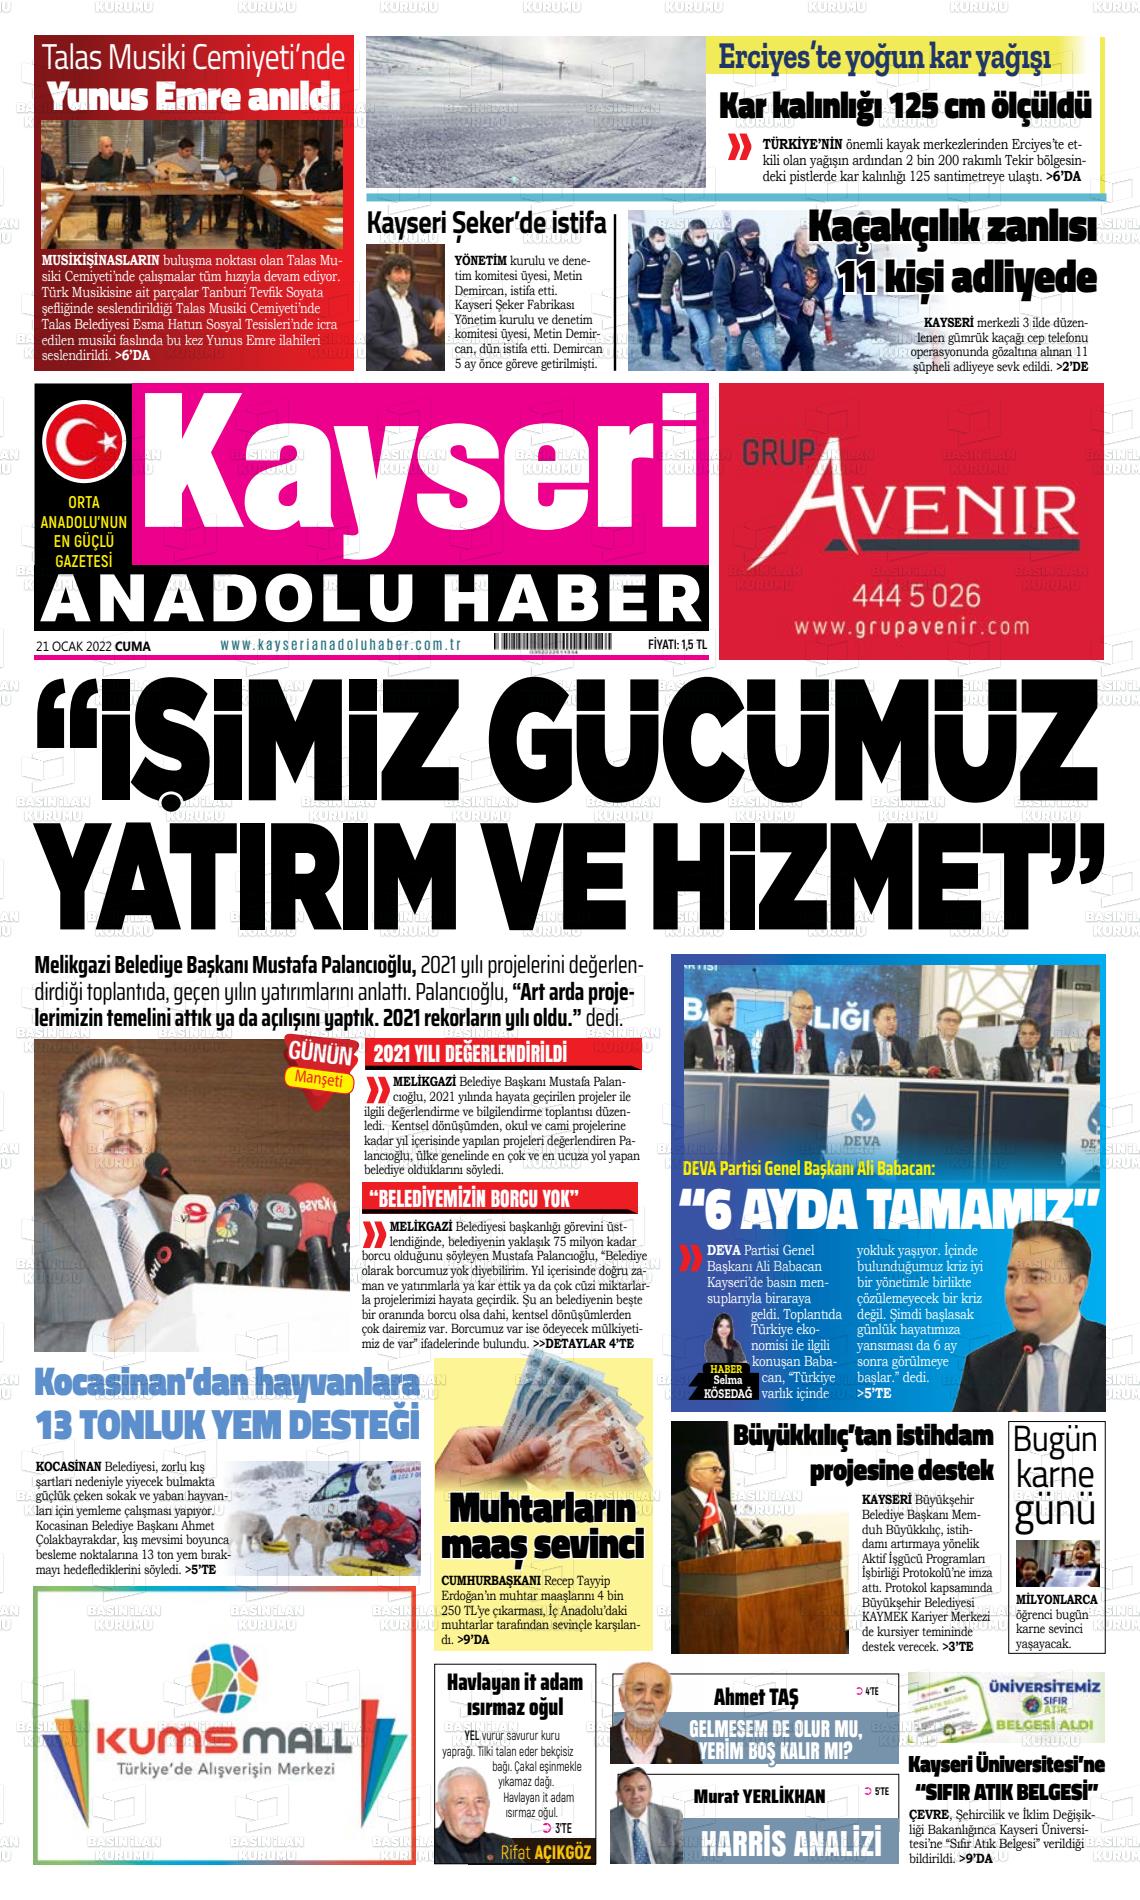 21 Ocak 2022 Kayseri Anadolu Haber Gazete Manşeti